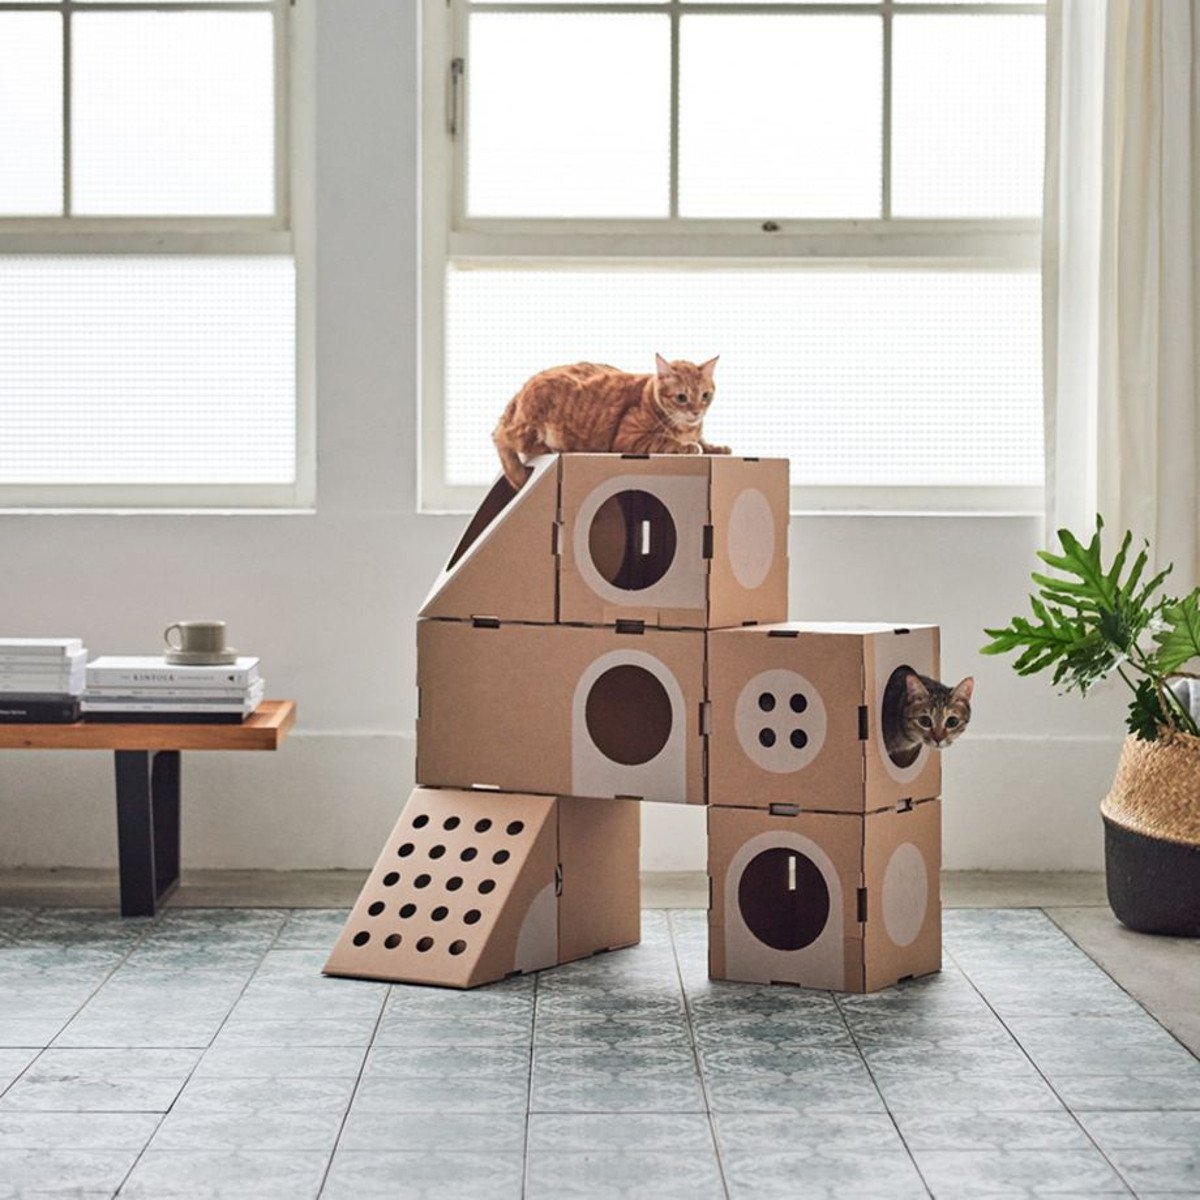 Cat thing. Картонные домики для котов. Домики для котов из коробок. Картонный домик для кошки. Кошачьи домики из коробок.